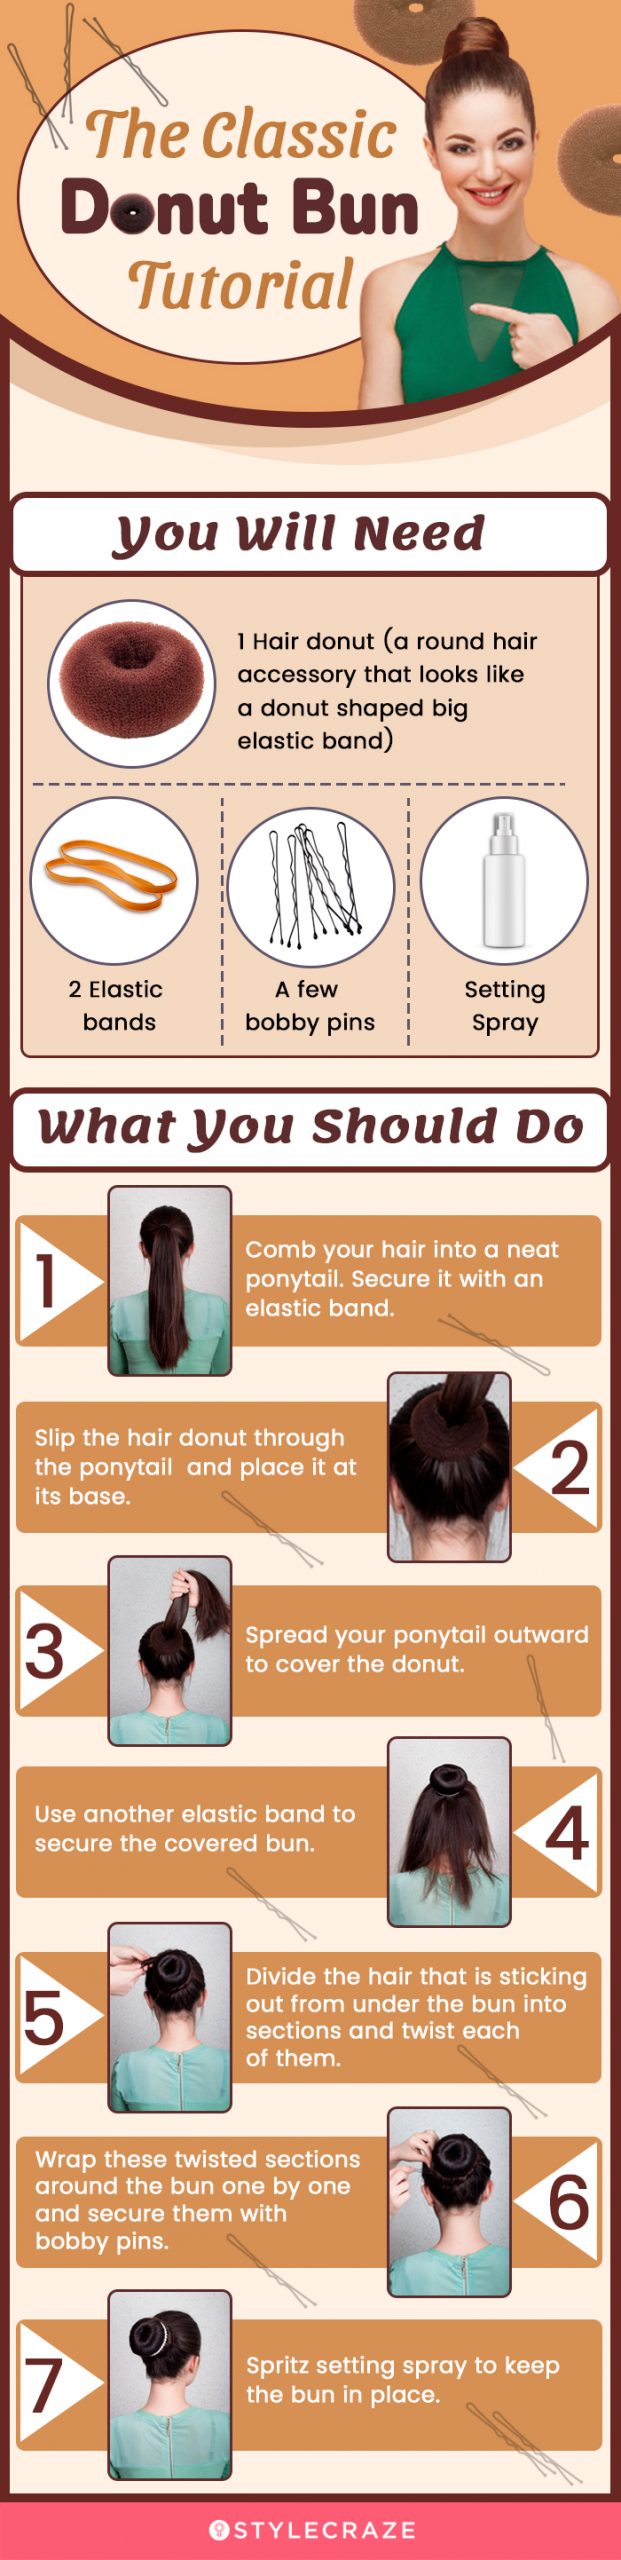 the classic donut bun tutorial (infographic)